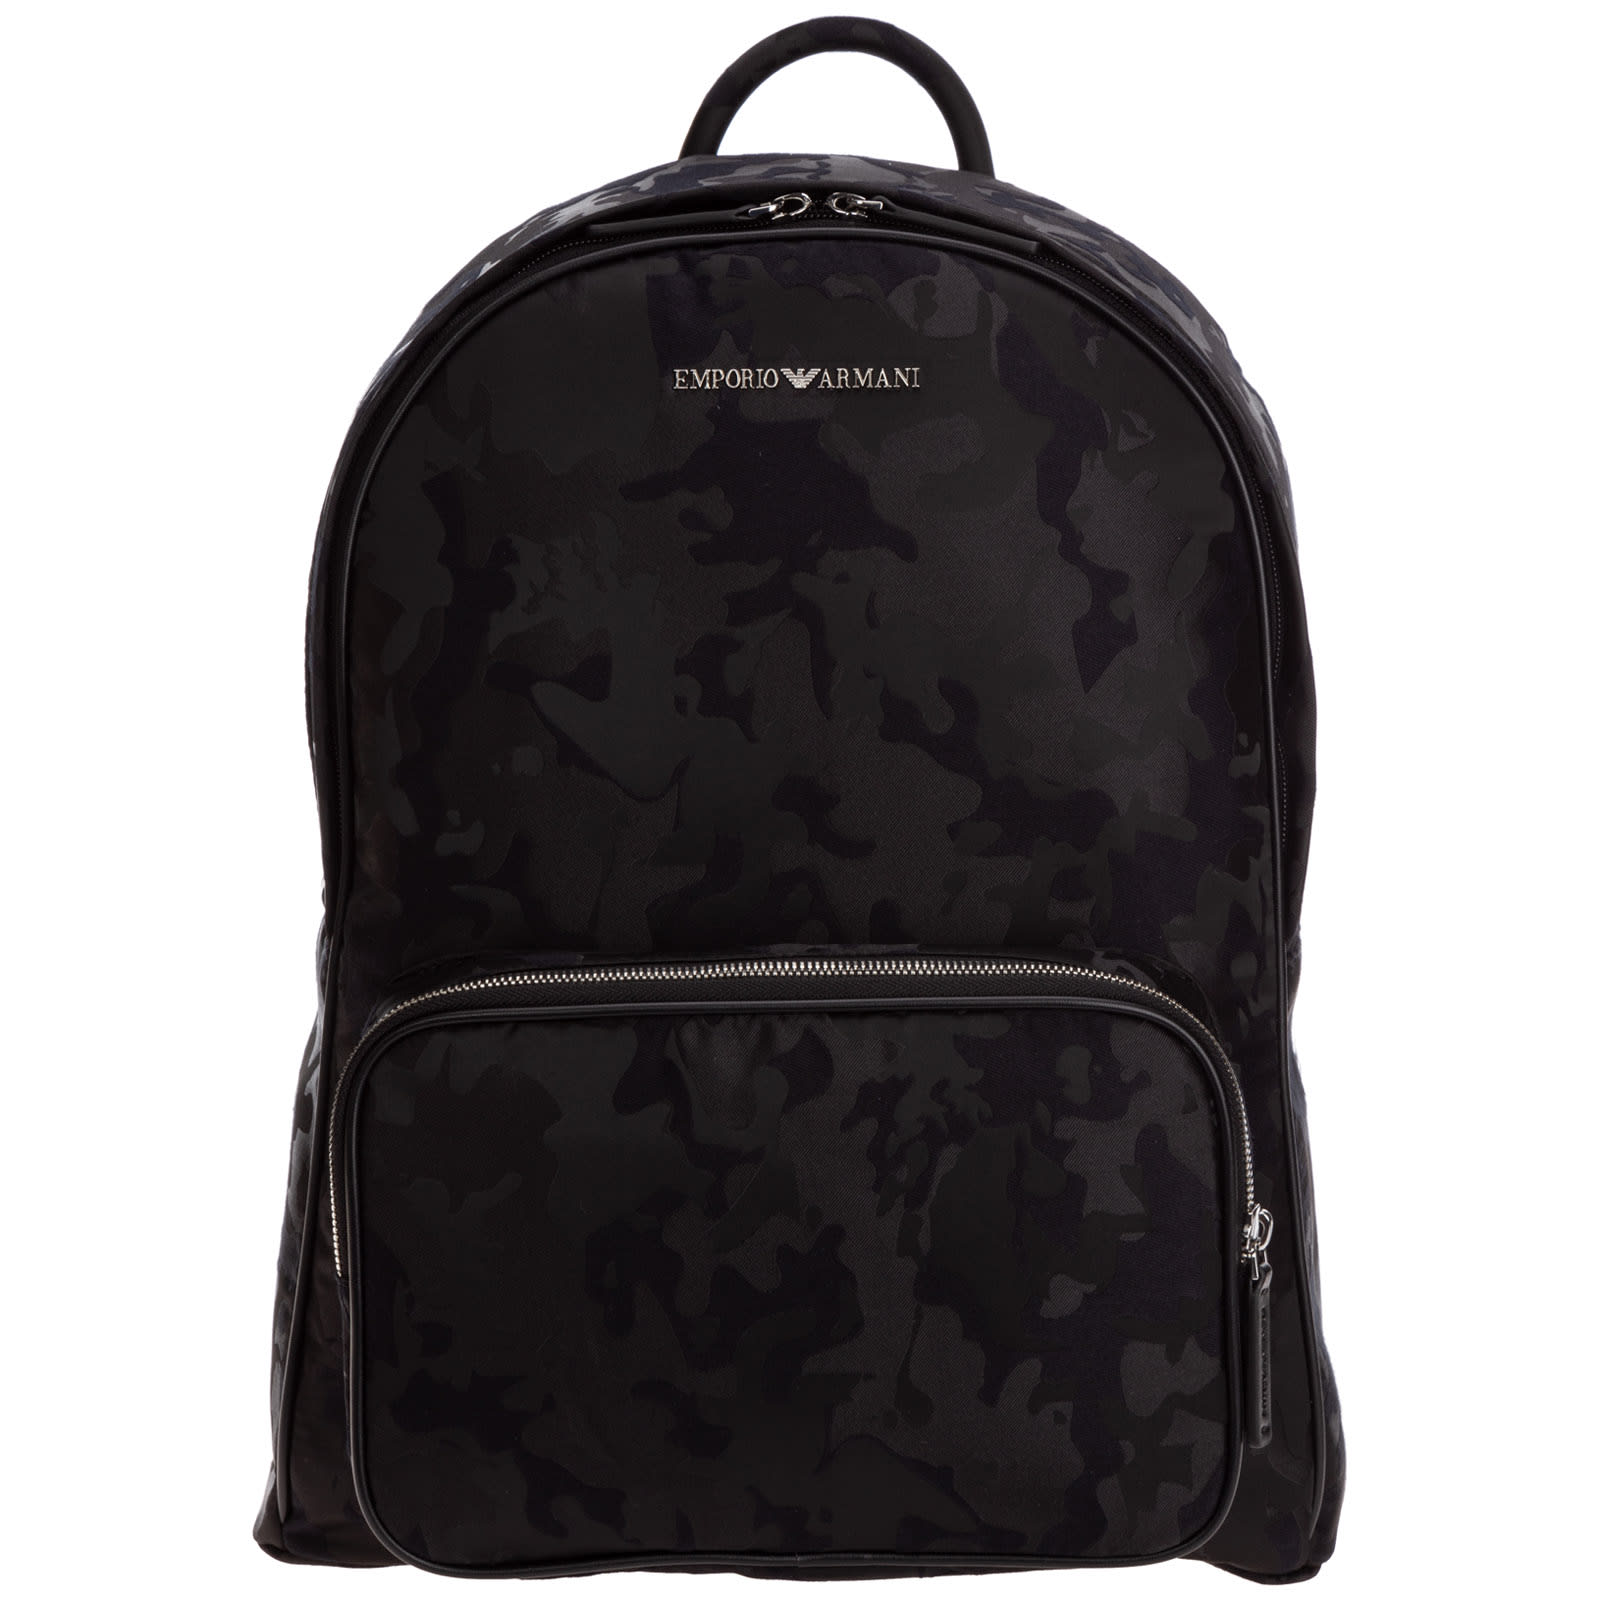 Emporio Armani Canada Backpack